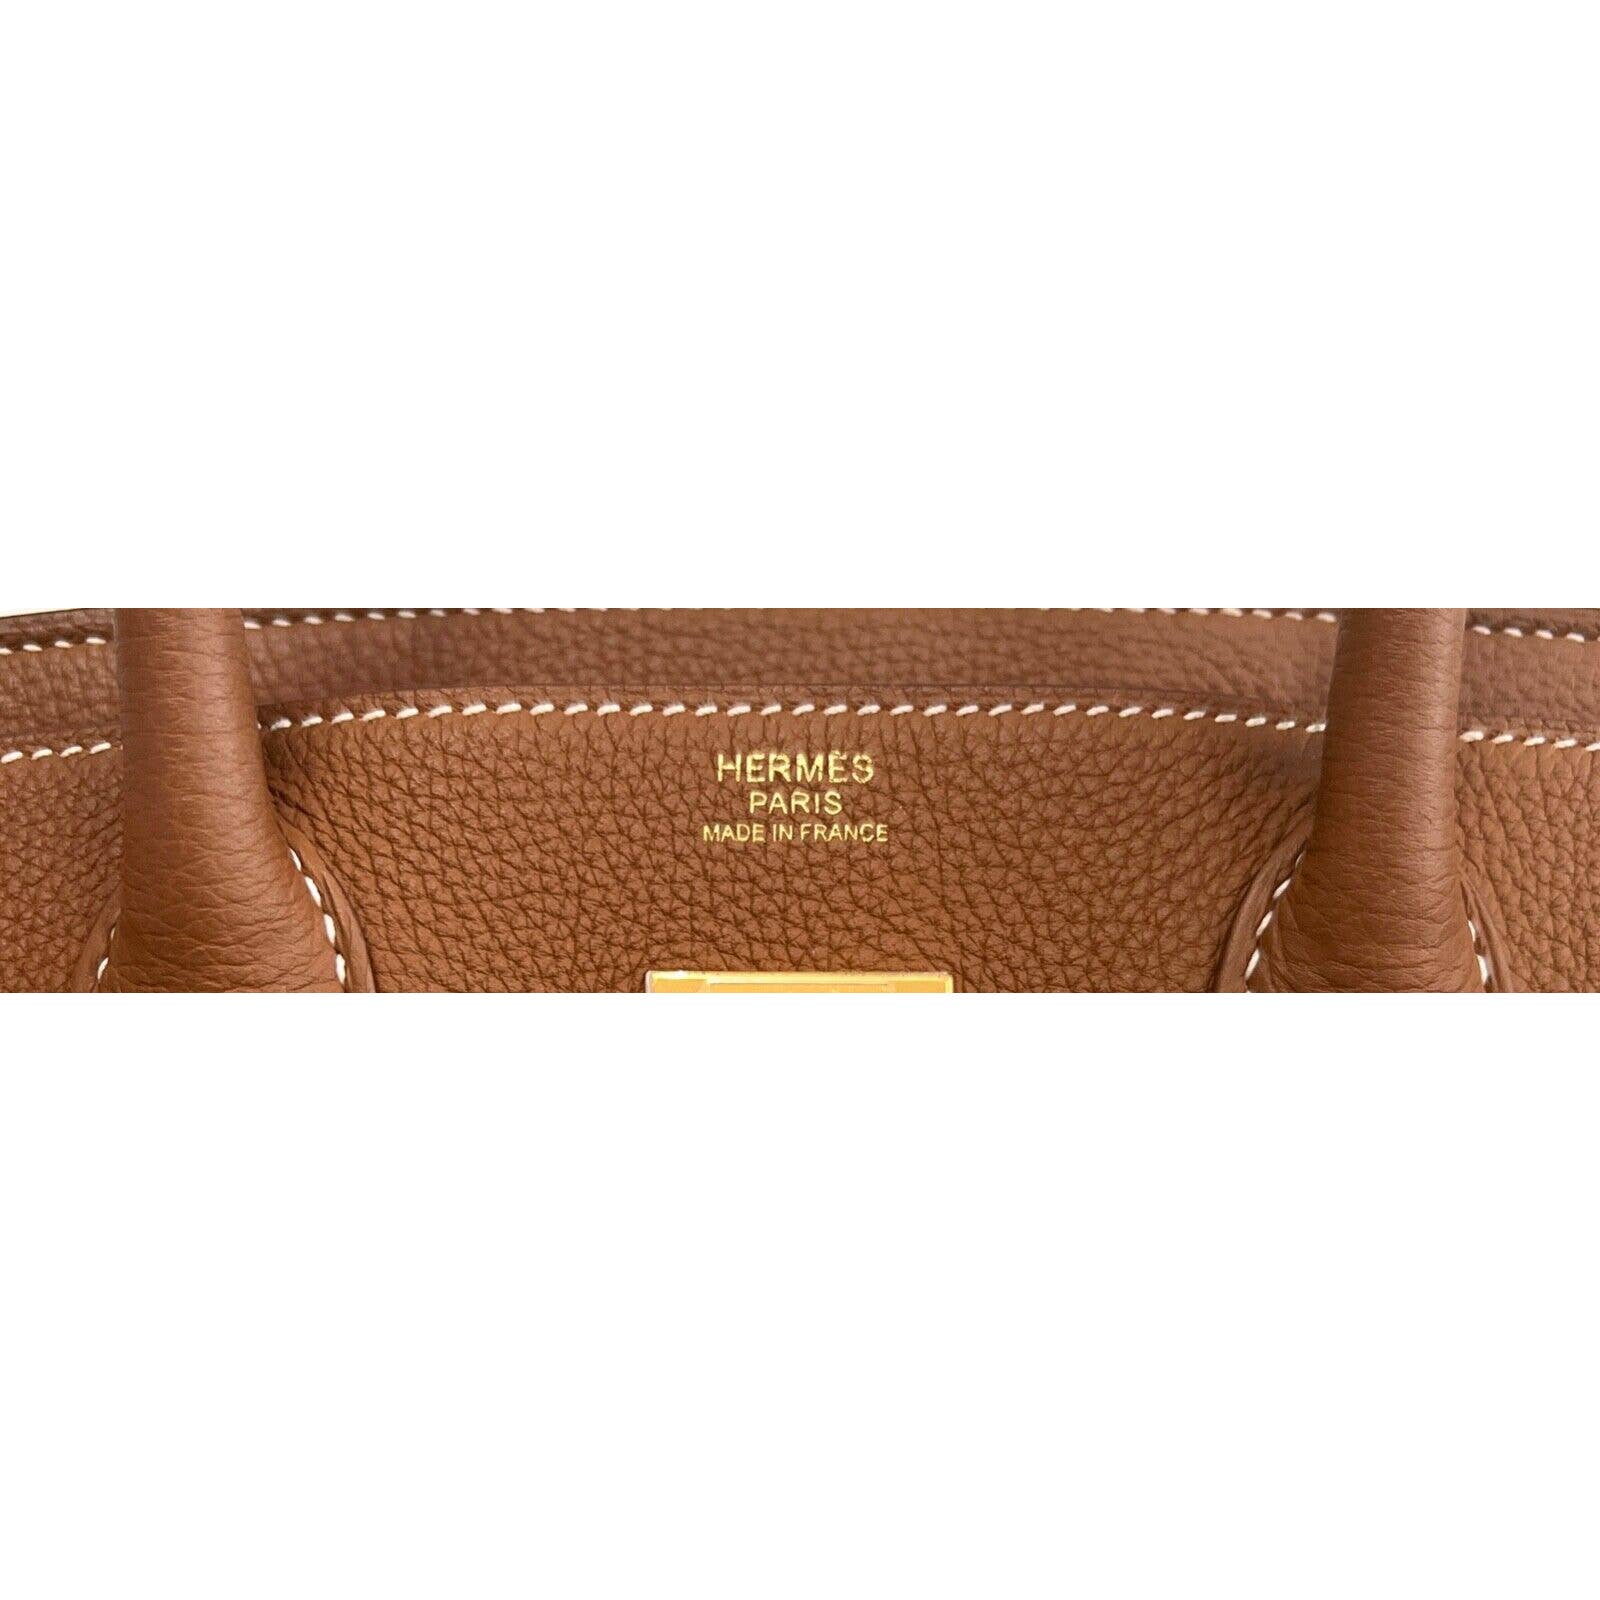 Hermès Birkin Gold Togo 30 Bag